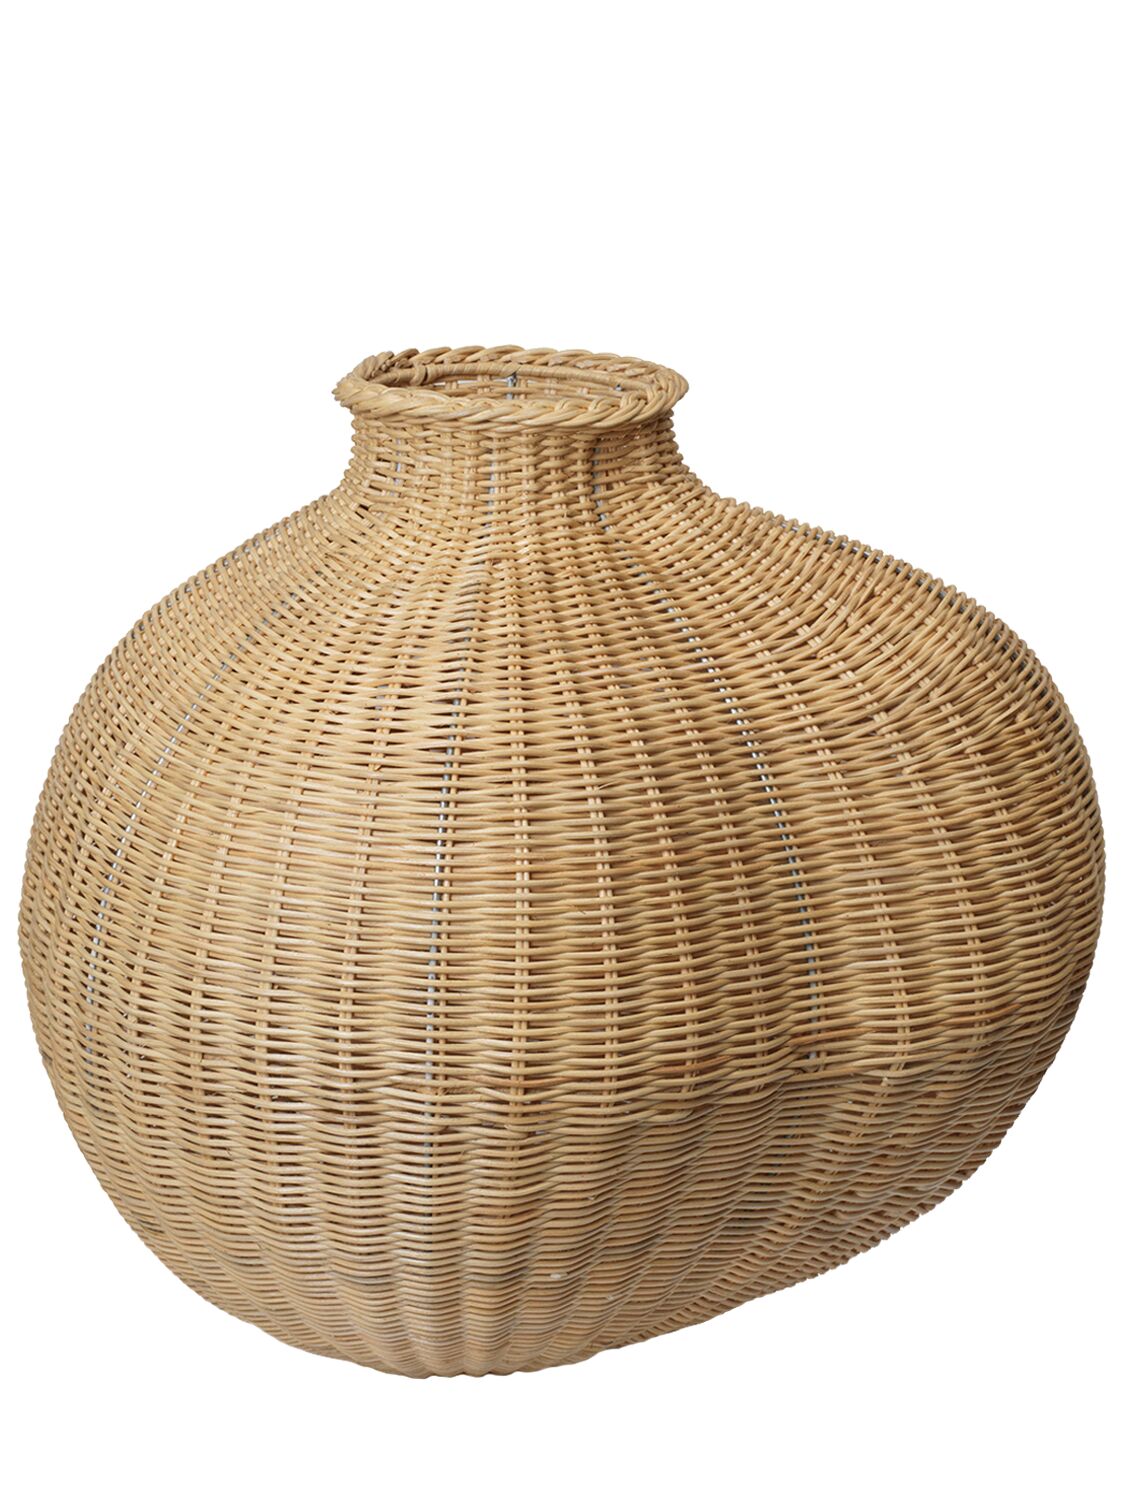 Ferm Living Bola Braided Rattan Floor Vase In Brown